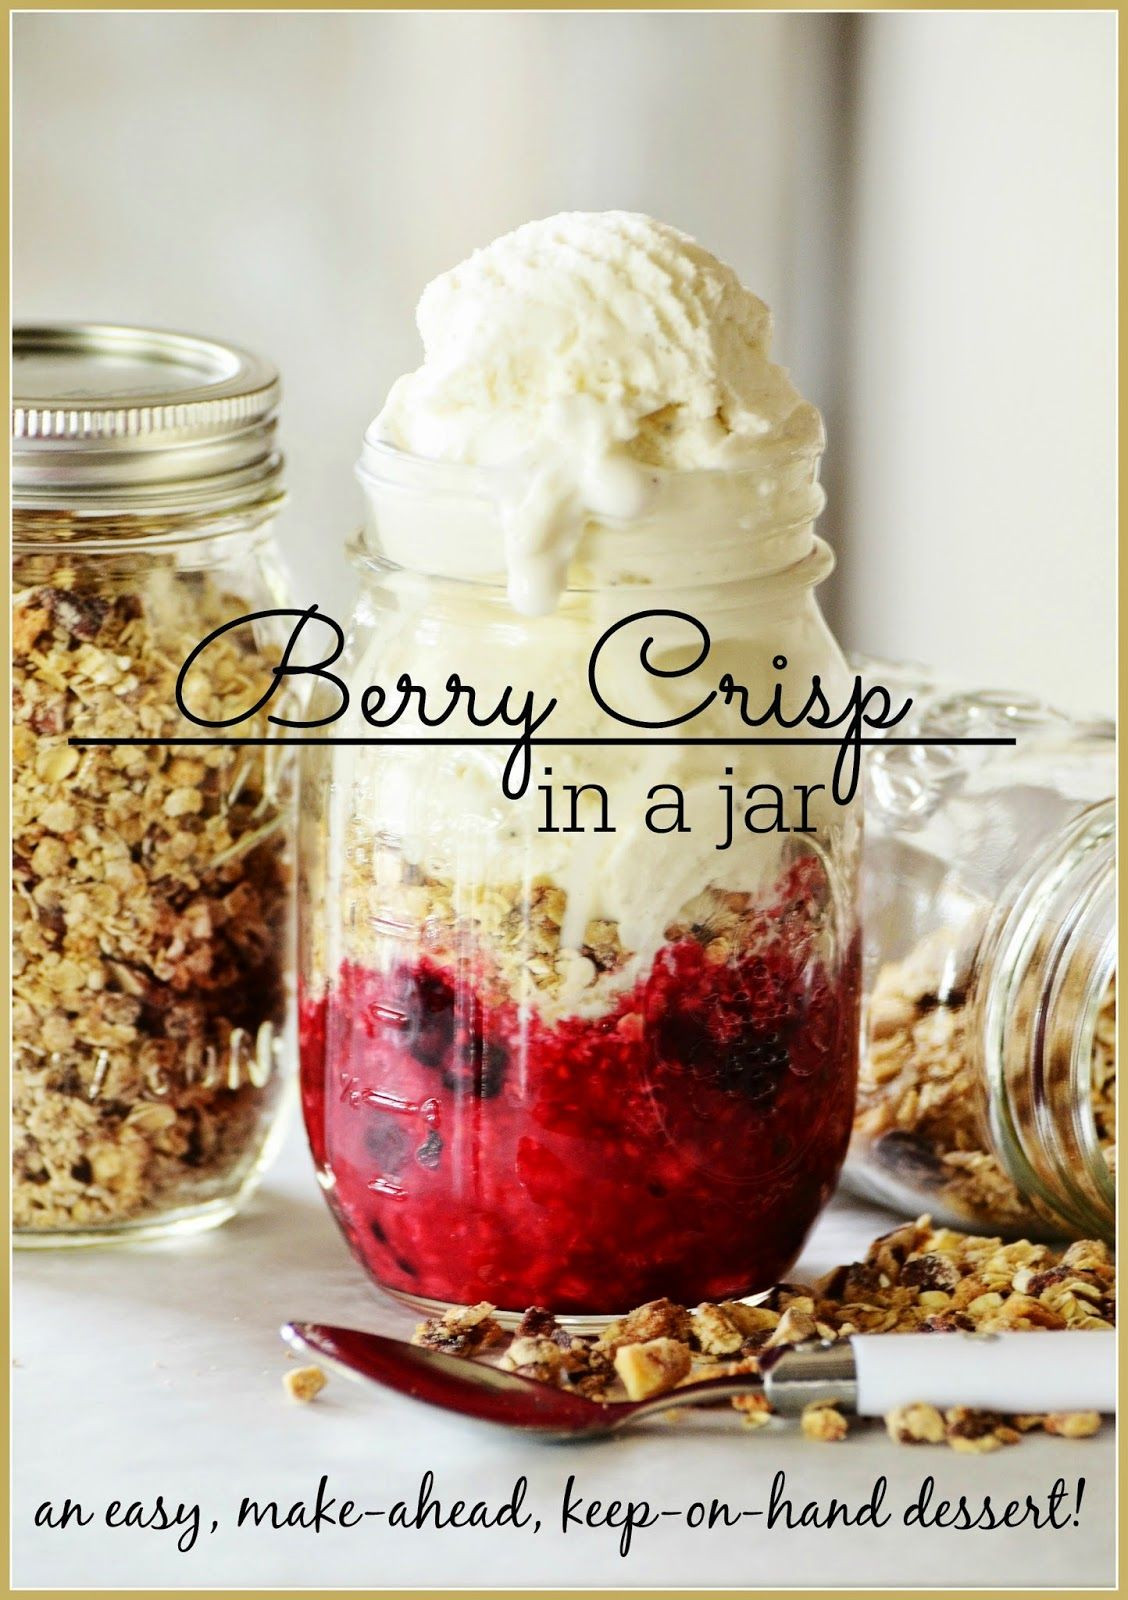 Make Ahead Mason Jar Desserts
 BERRY CRISP IN A JAR EASY MAKE AHEAD DESSERT